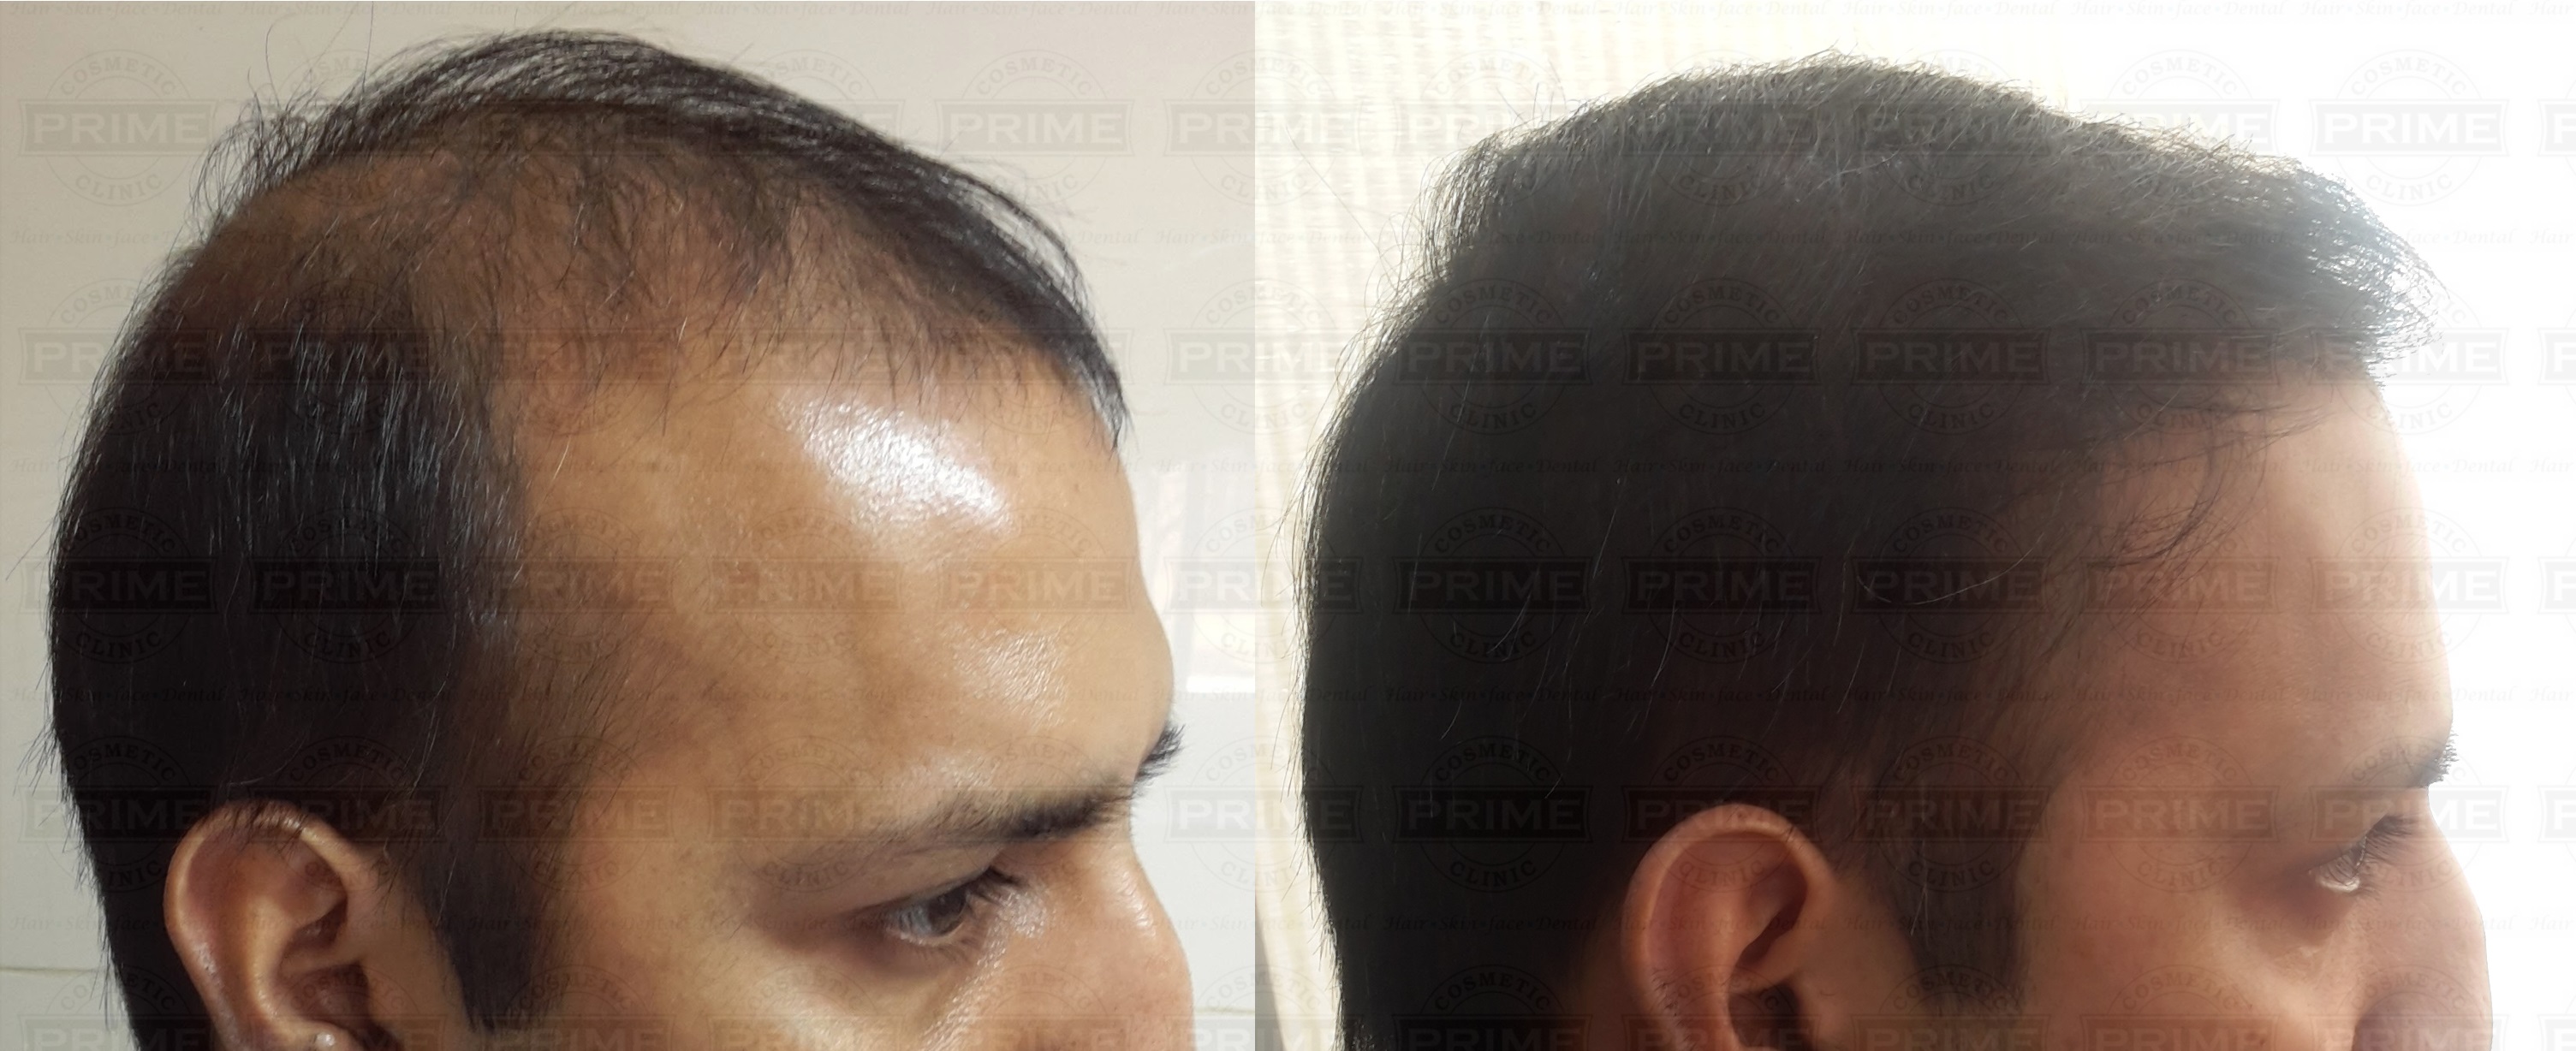 Prime Hair Studio and Cosmetic Clinic, Mumbai